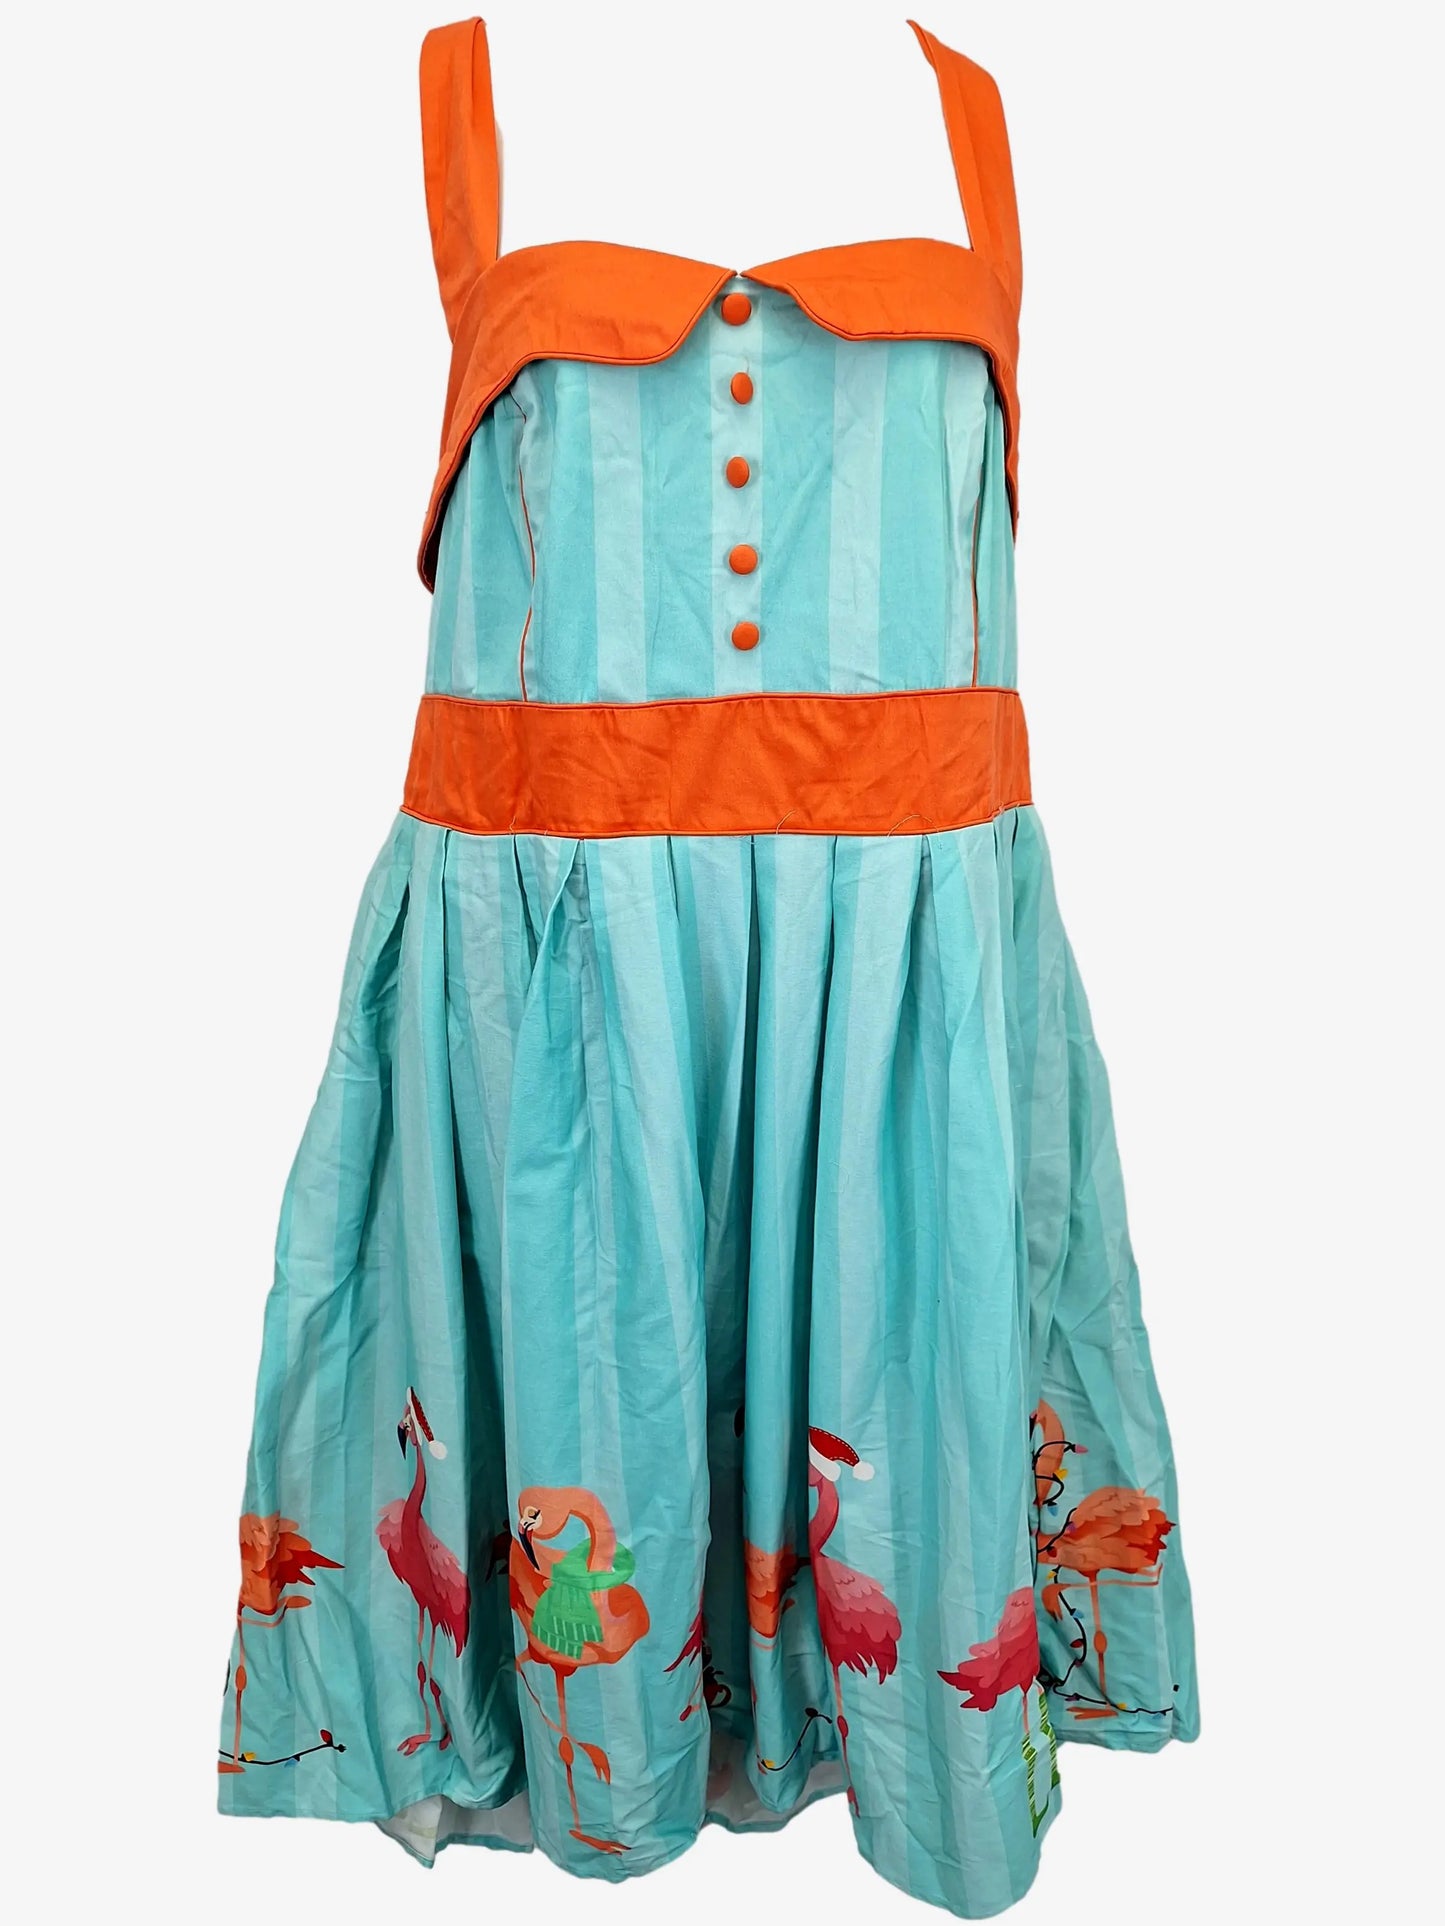 Laurina Jean Retro Halta Falala Mingo Midi Dress Size 24 Plus by SwapUp-Online Second Hand Store-Online Thrift Store